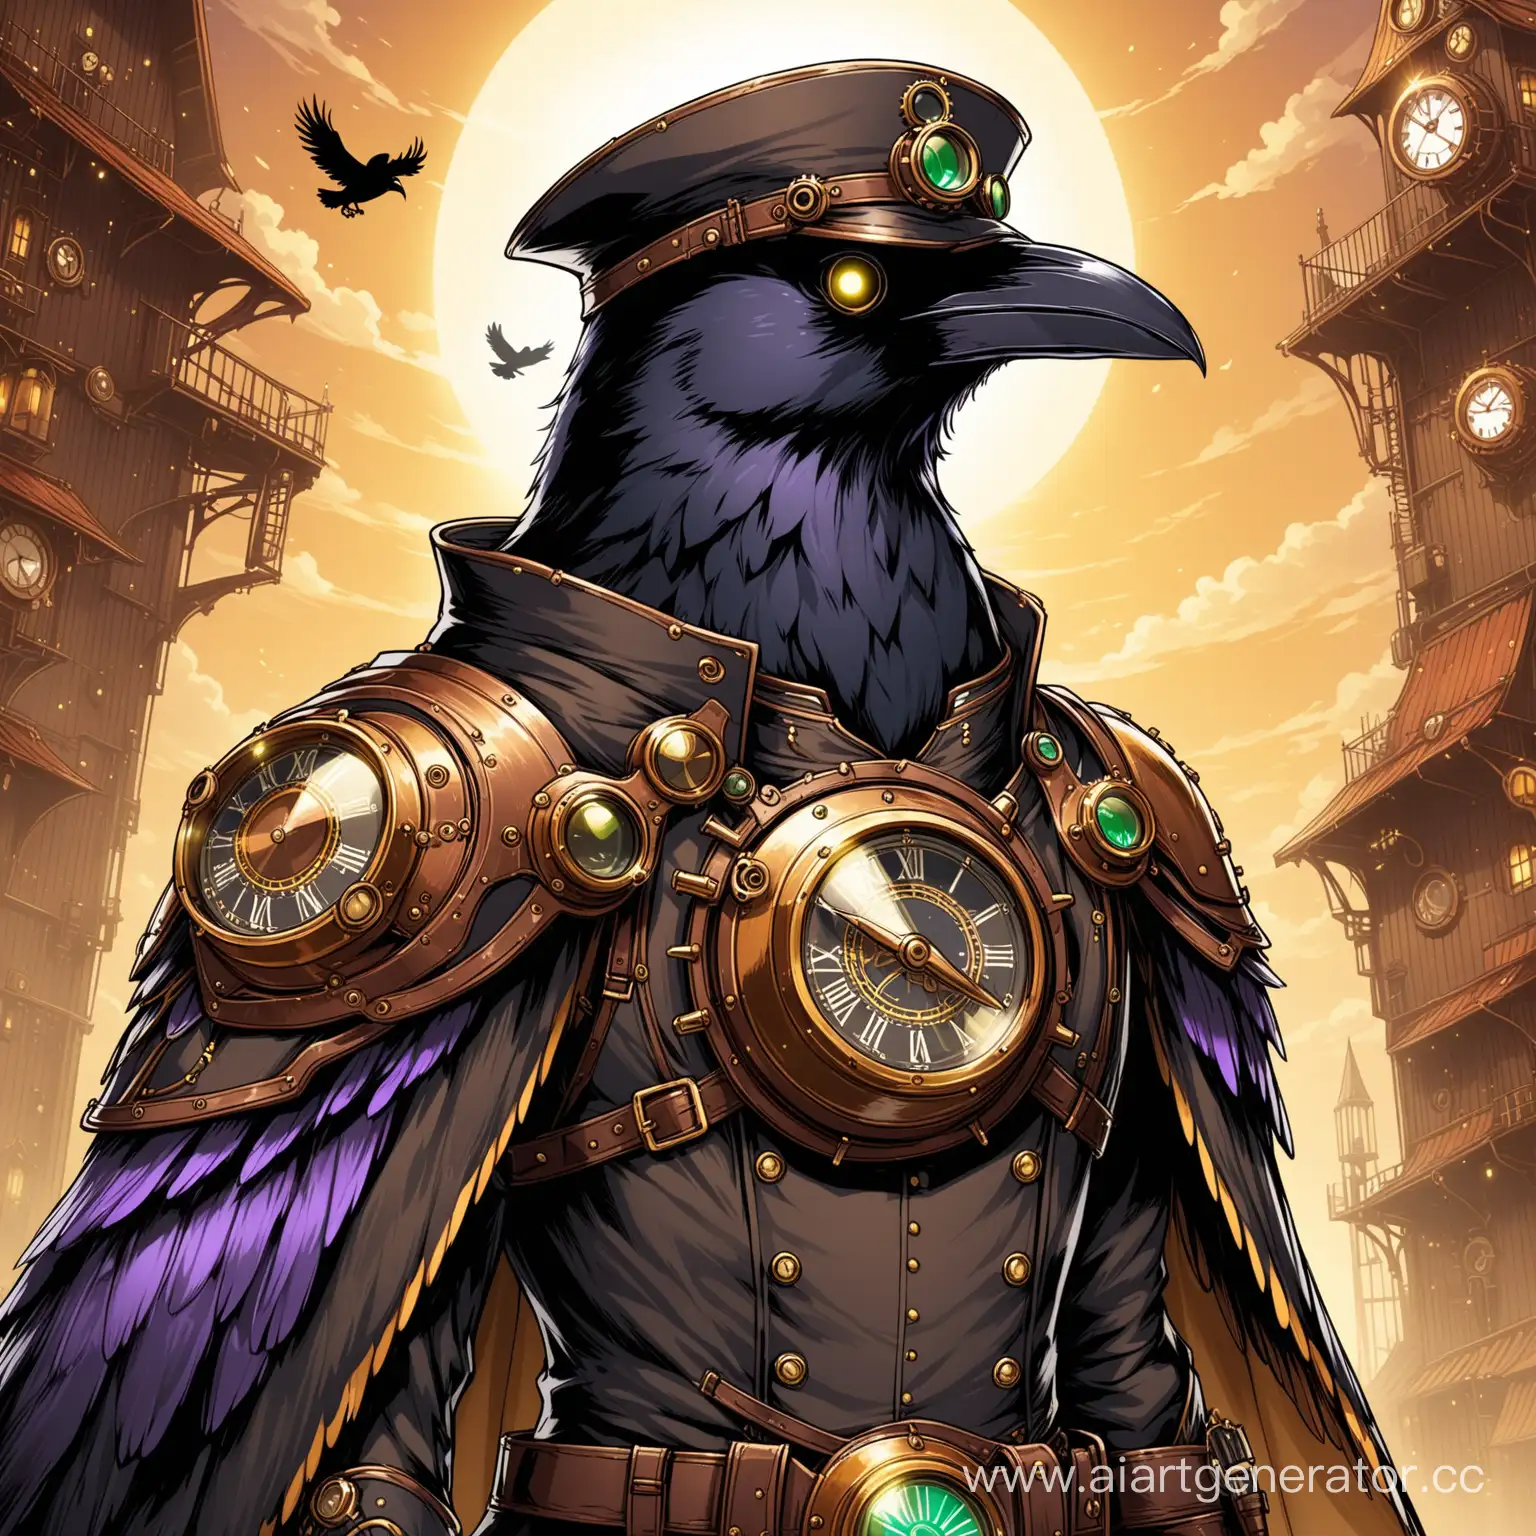 Paladin is a steampunk raven
